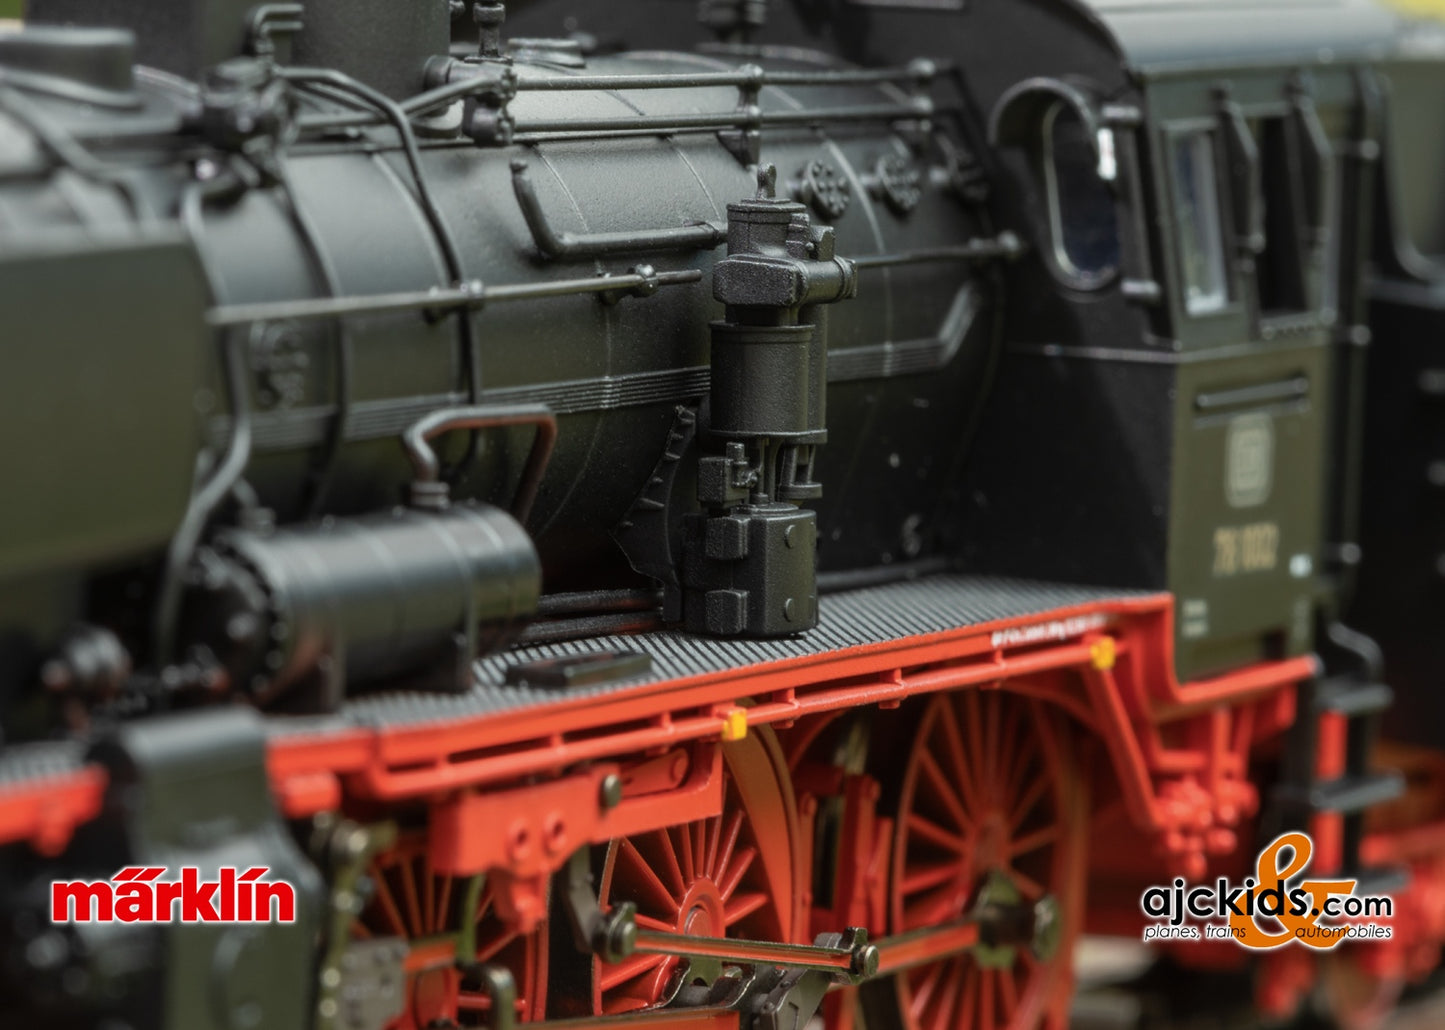 Marklin 39782 - Class 78.10 Steam Locomotive